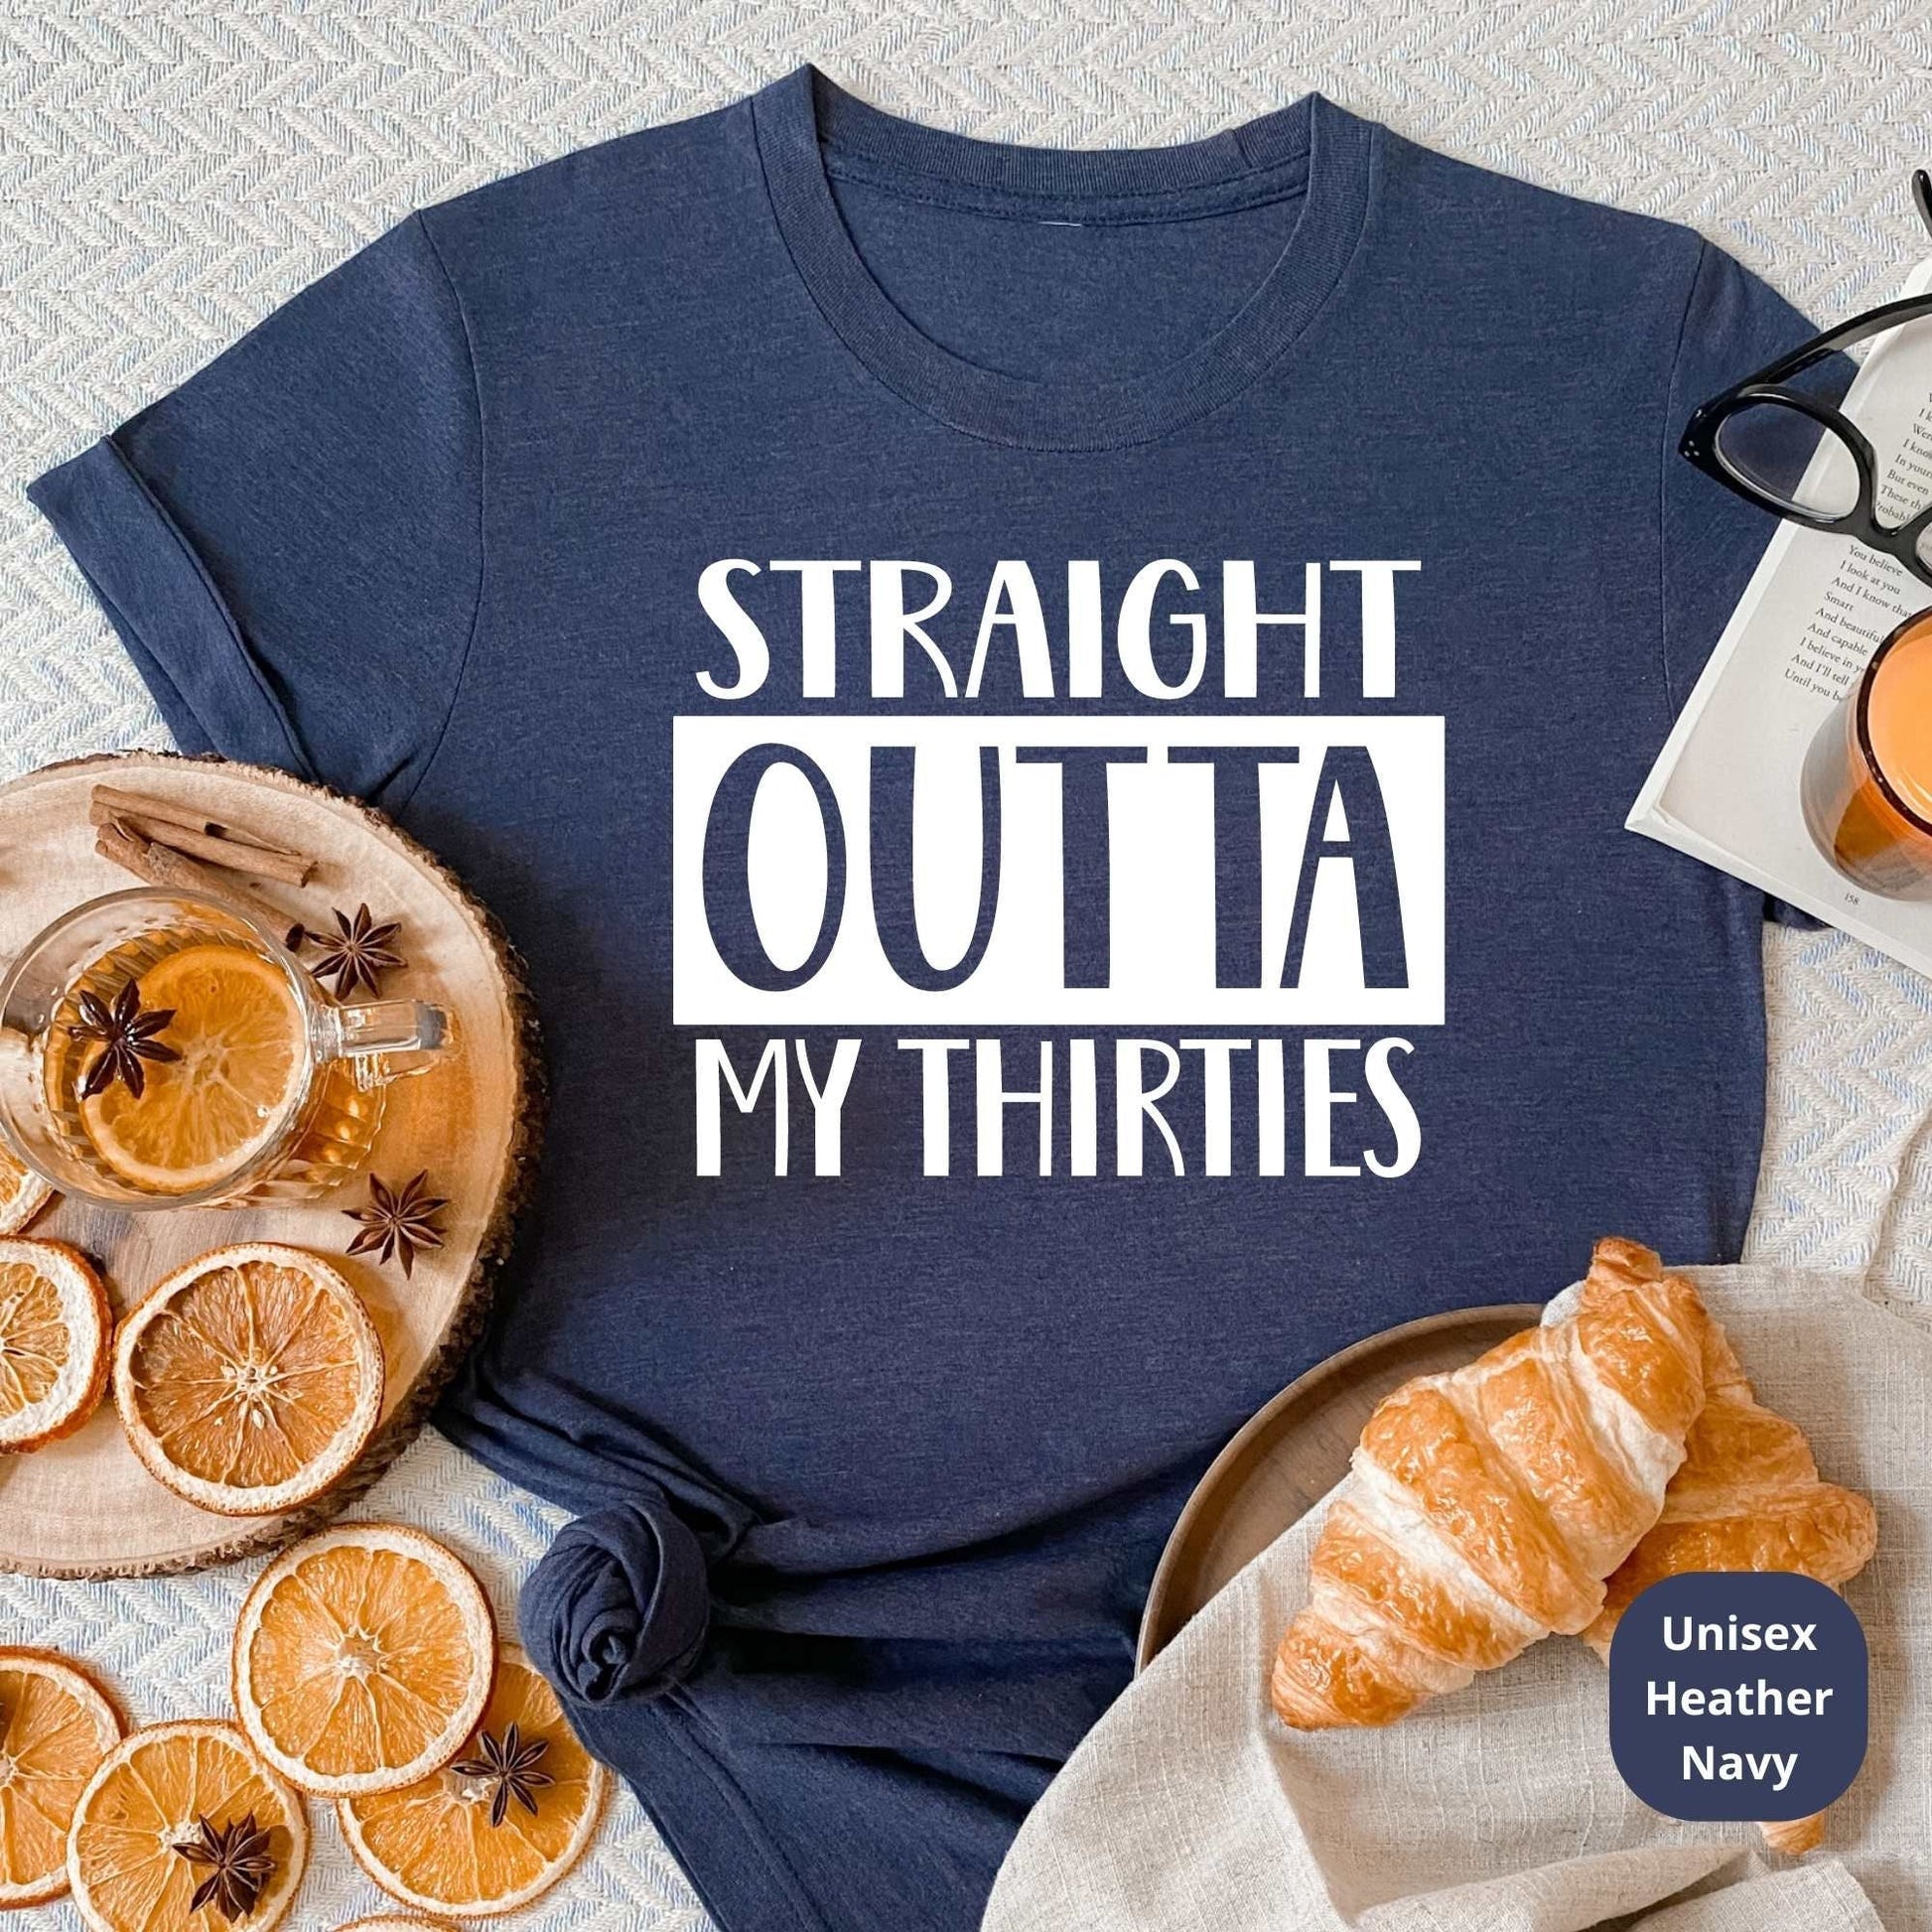 Straight Outta My Thirties, 40th Birthday Shirt, 40th Birthday Gift HMDesignStudioUS